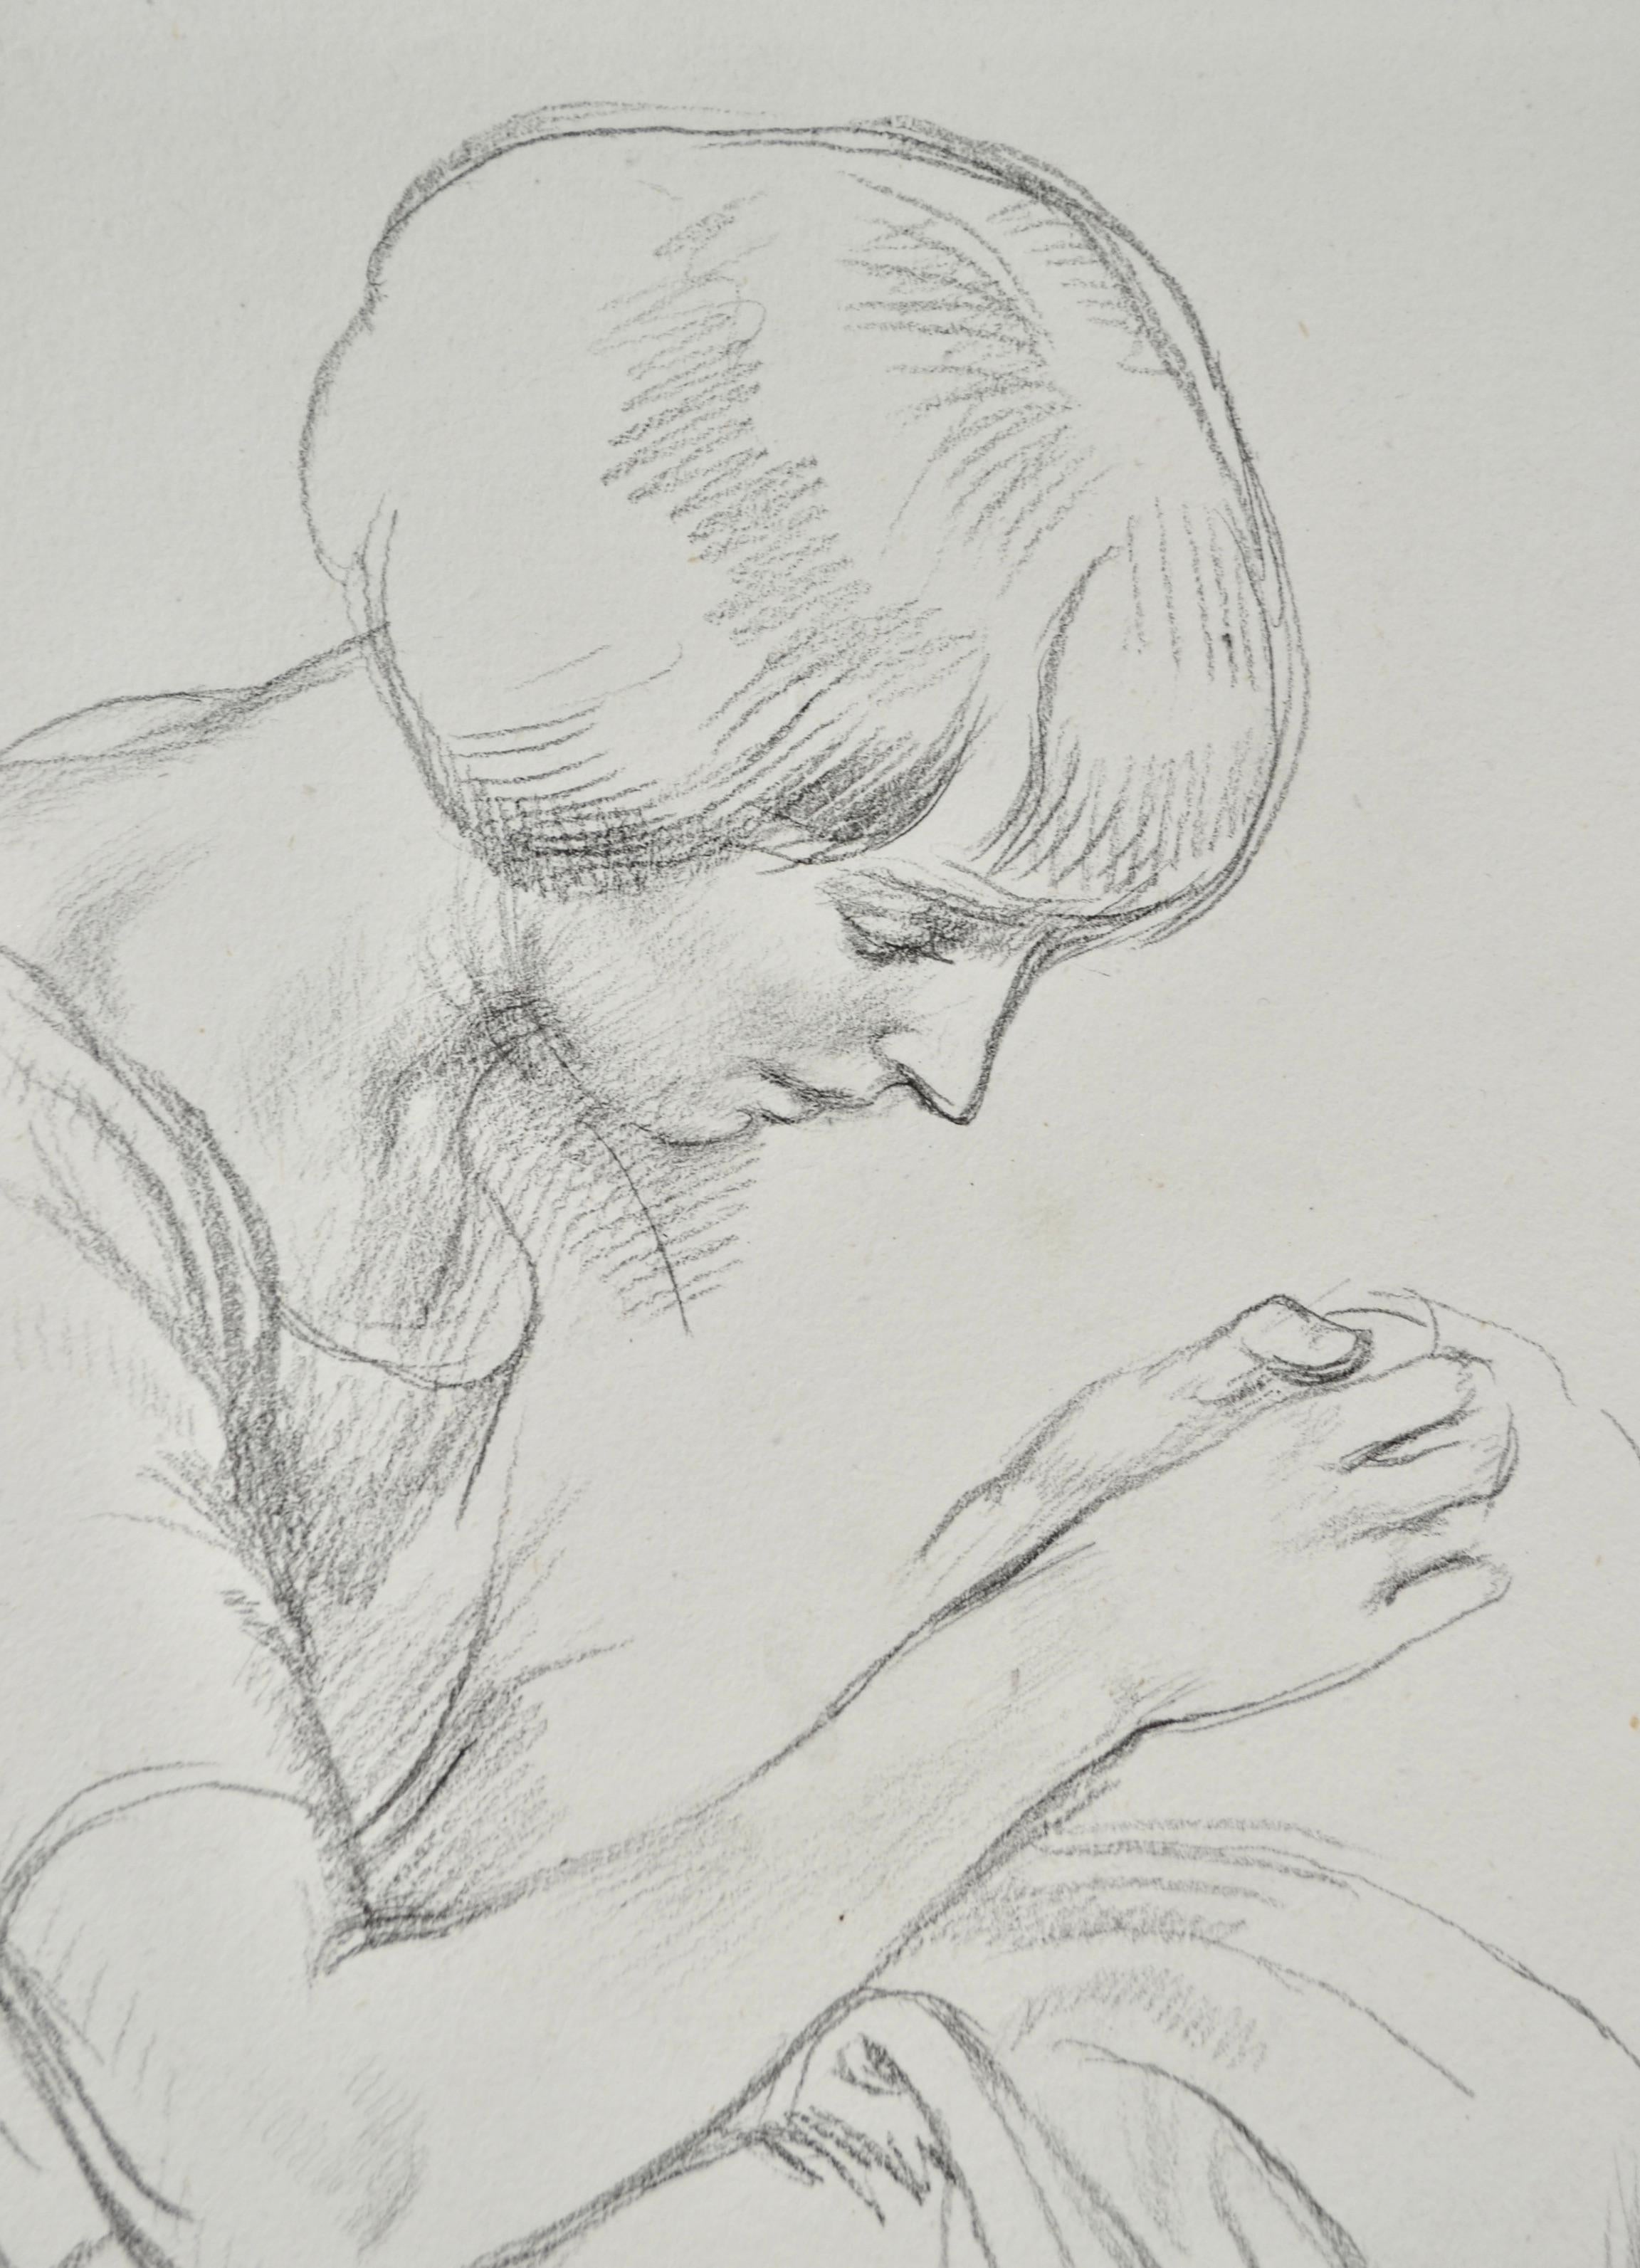 Birdie Sewing - 20th Century British drawing of the artist's wife by Schwabe - Art by Randolph Schwabe, RWS, NEAC